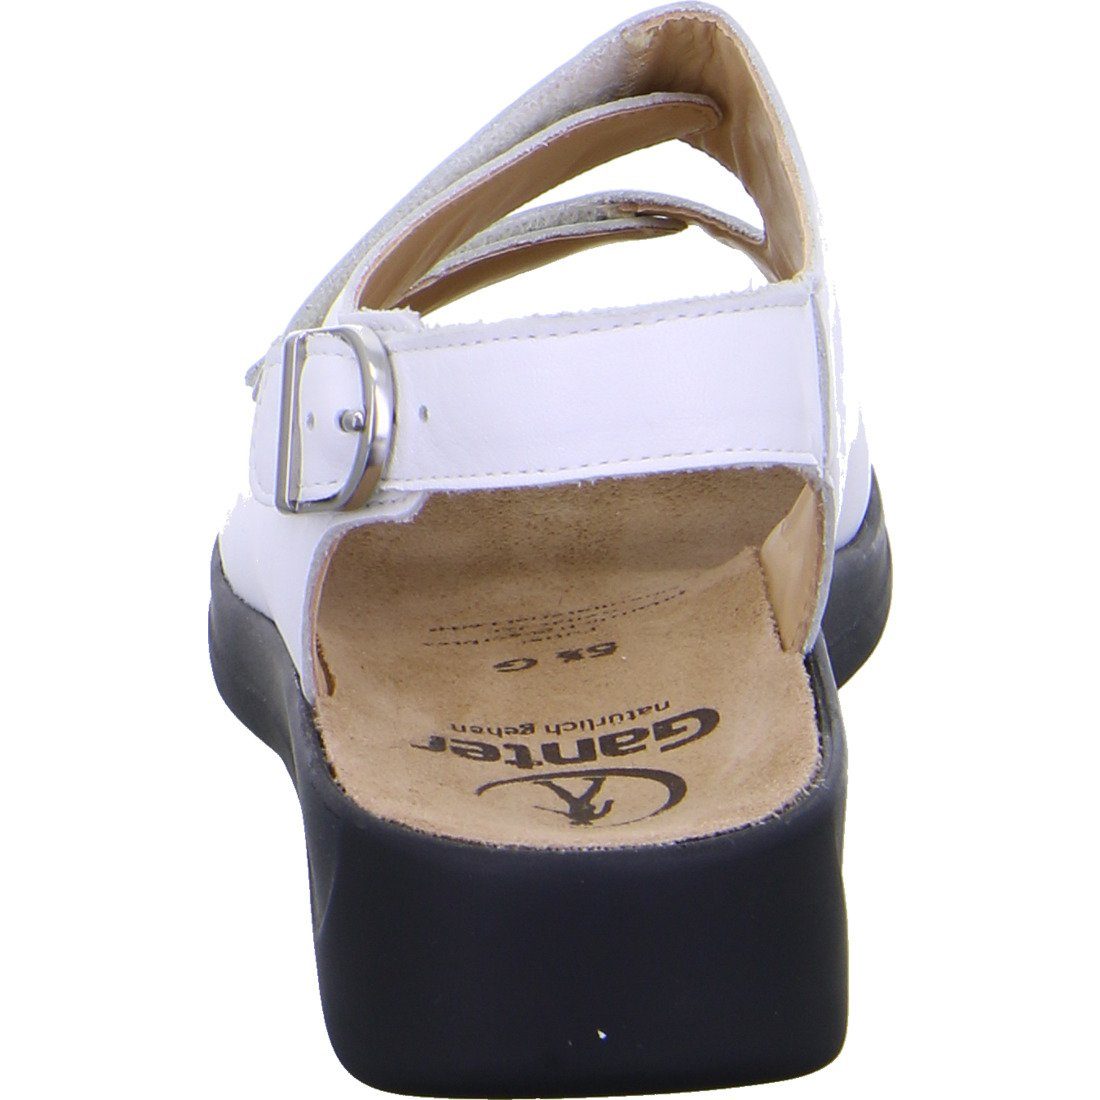 Sandalette - Ganter Sandalette 045896 weiß Monica Ganter Schuhe, Materialmix